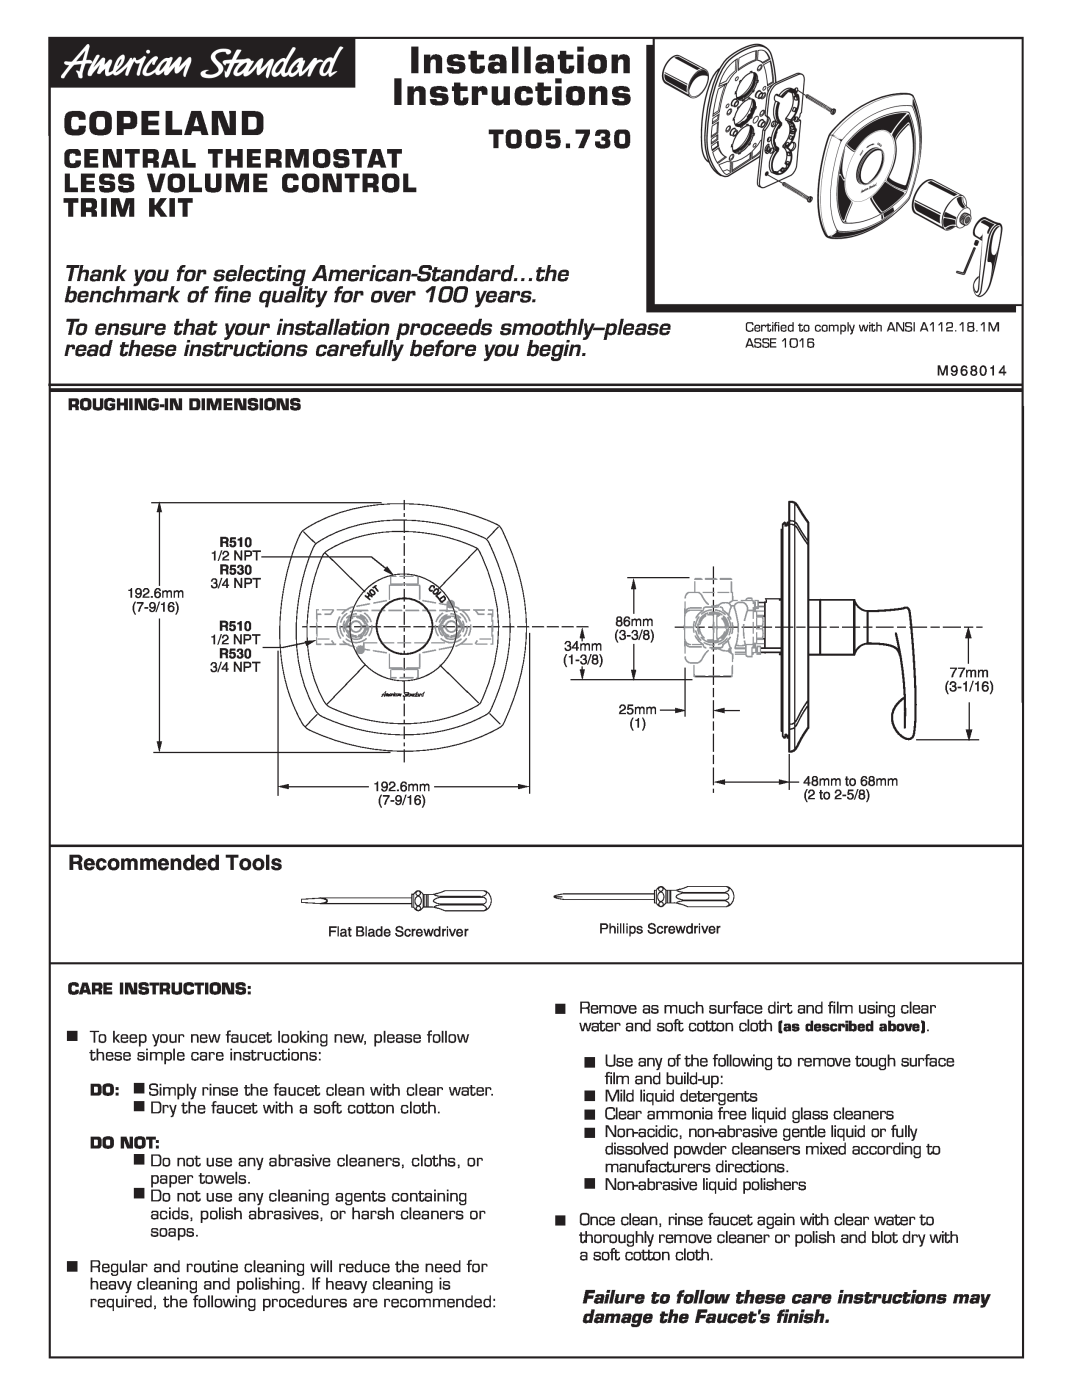 American Standard installation instructions COPELANDT005.730, Central Thermostat Less Volume Control Trim Kit 